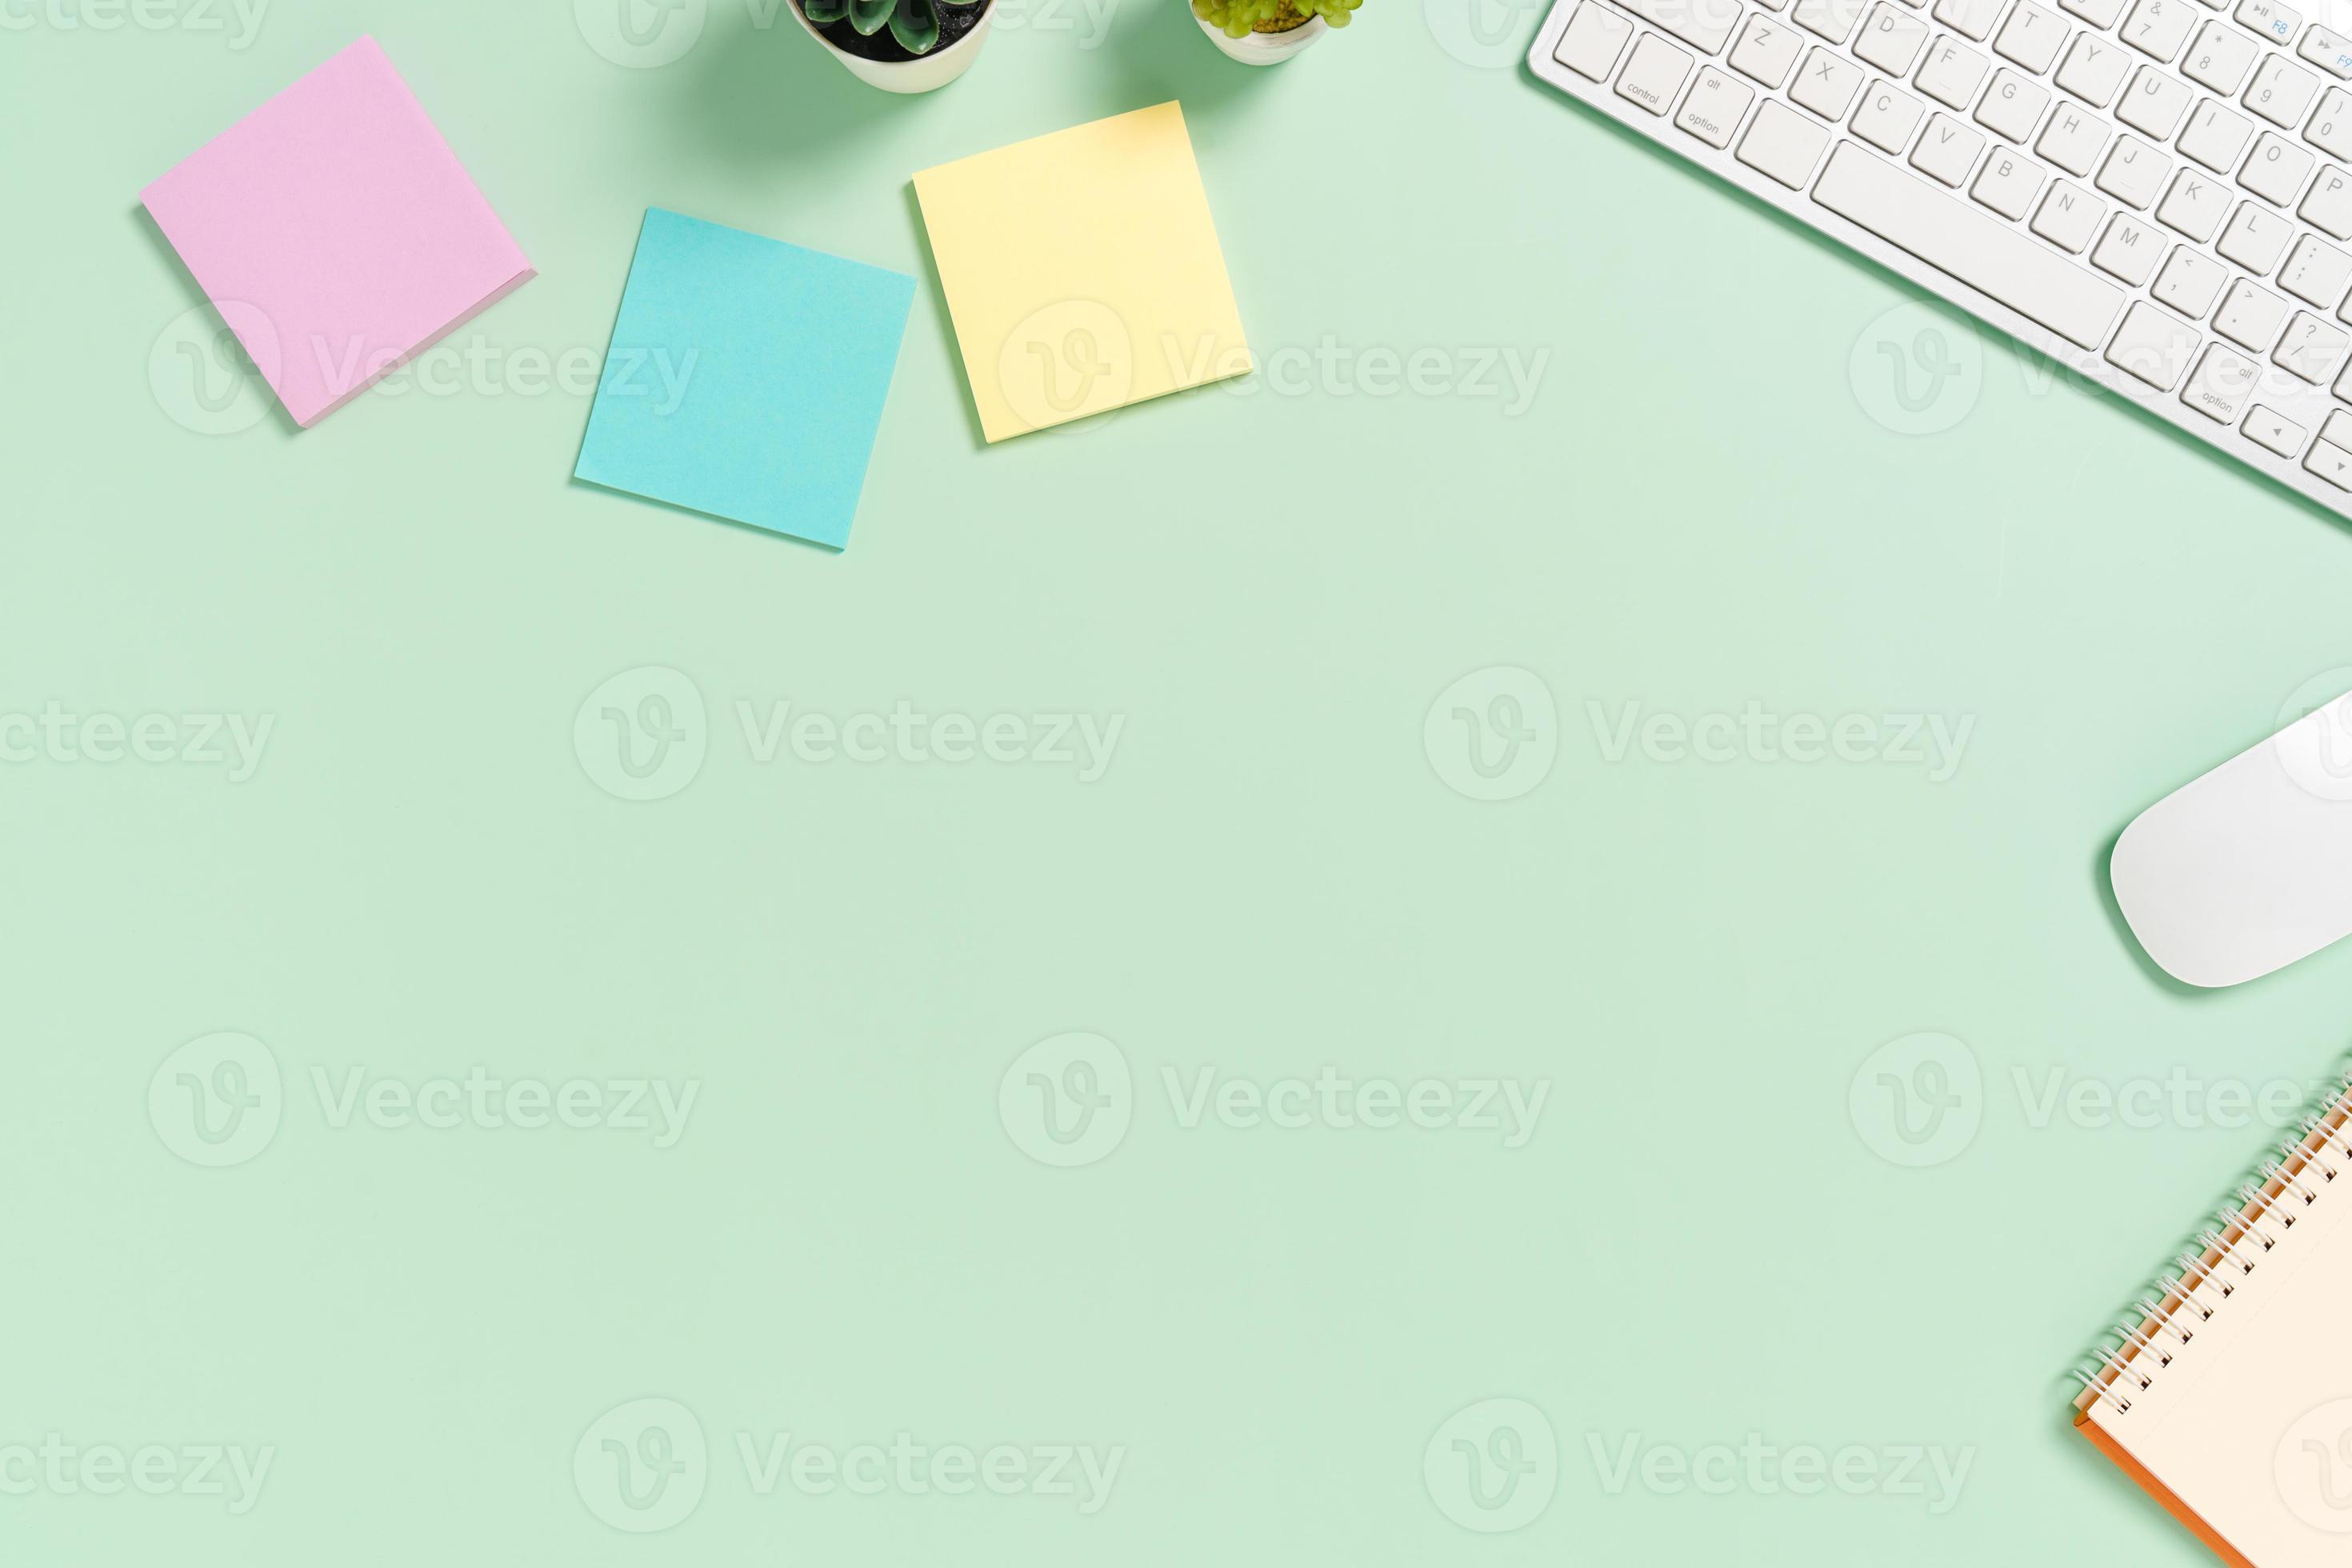 minimale werkruimte - creatieve platliggende foto van werkruimtebureau. bovenaanzicht bureau met toetsenbord, muis en boek op pastel groene kleur achtergrond. bovenaanzicht met kopieerruimte, platliggende fotografie.